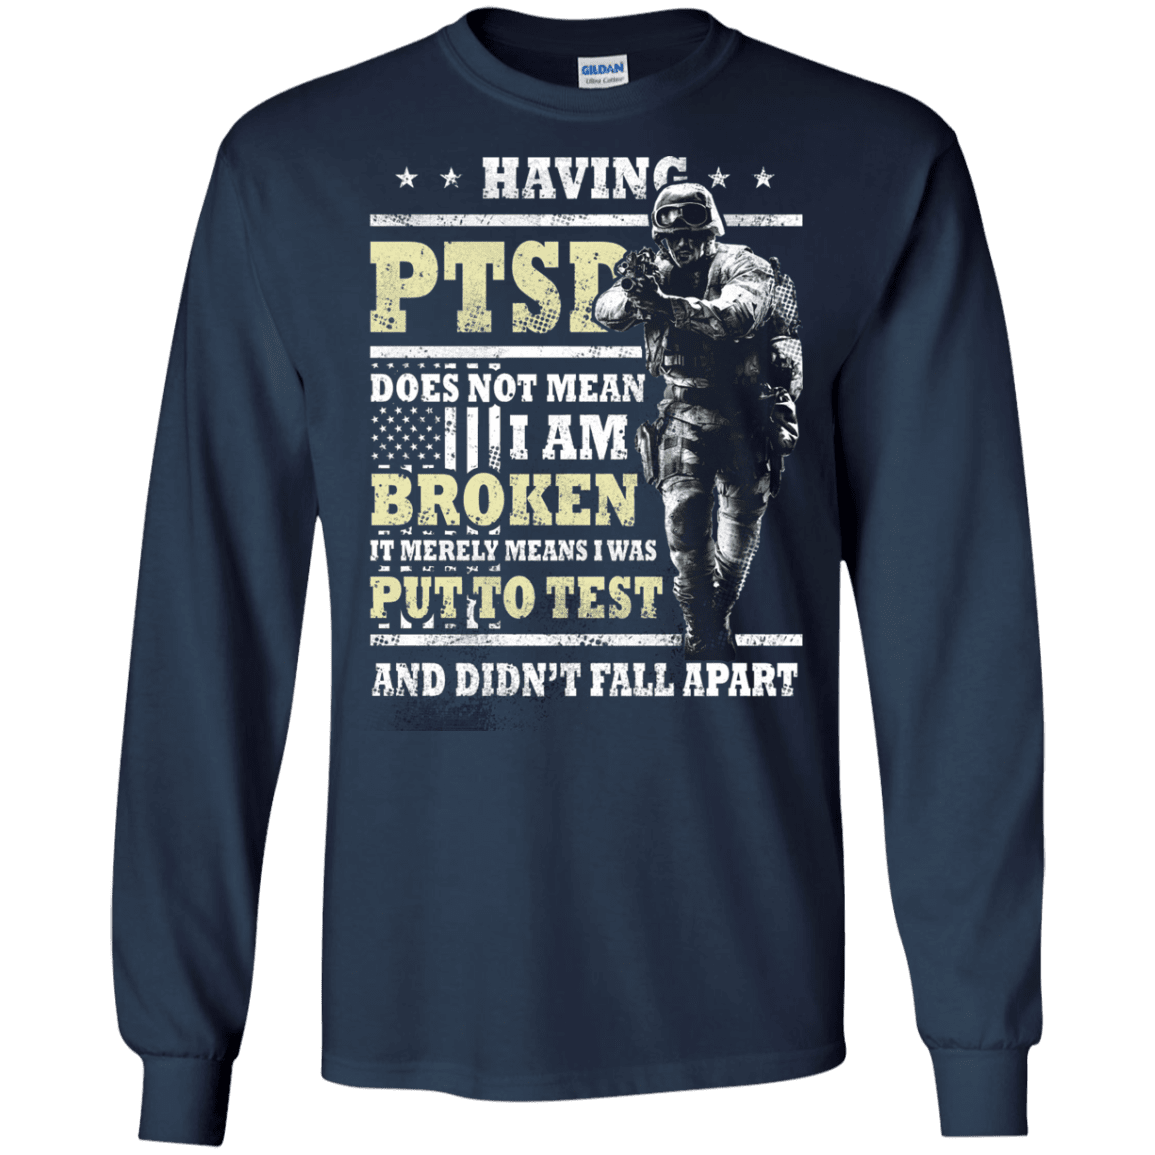 Military T-Shirt "Having PTSD Doen't Mean Broken" Front-TShirt-General-Veterans Nation